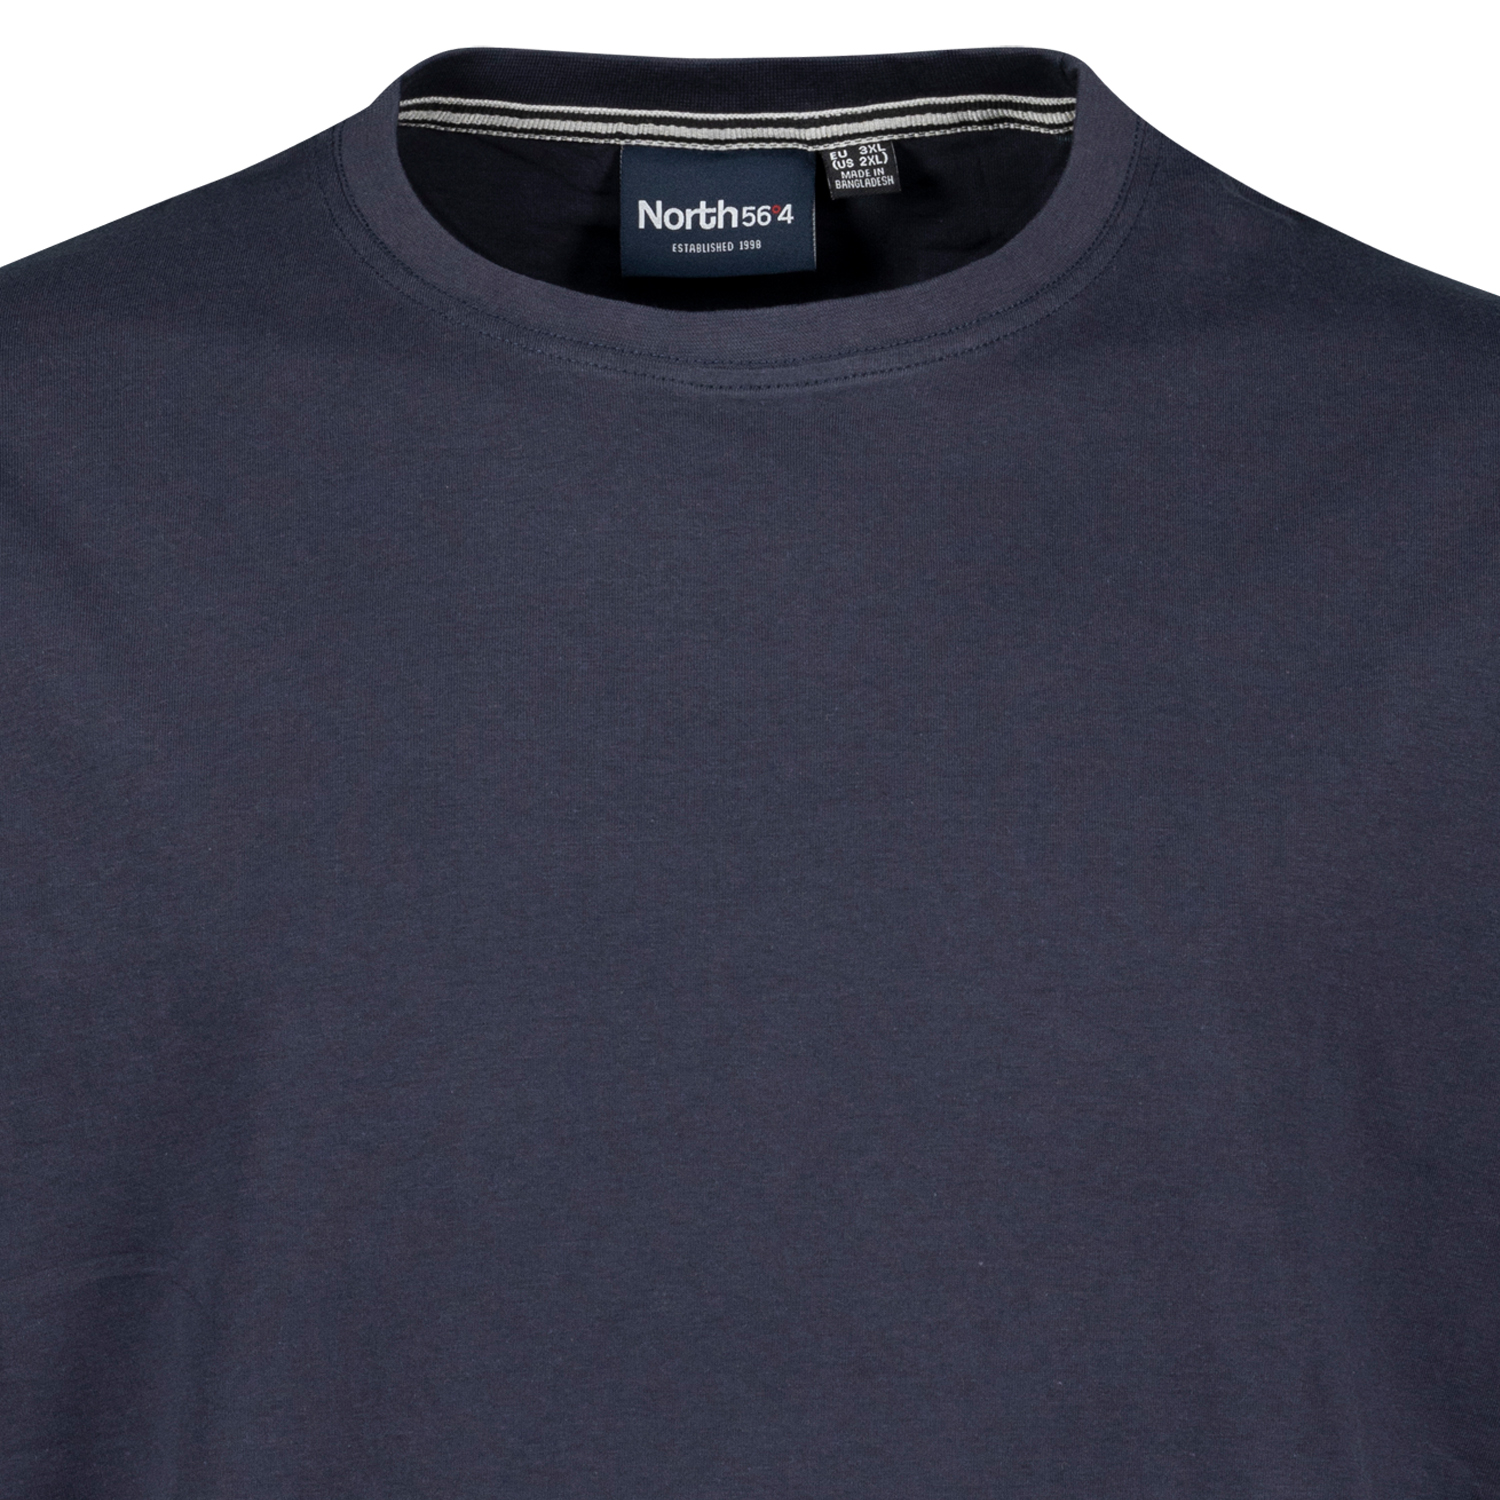 T-shirt in dark blue by North56°4 in plus sizes until 8XL